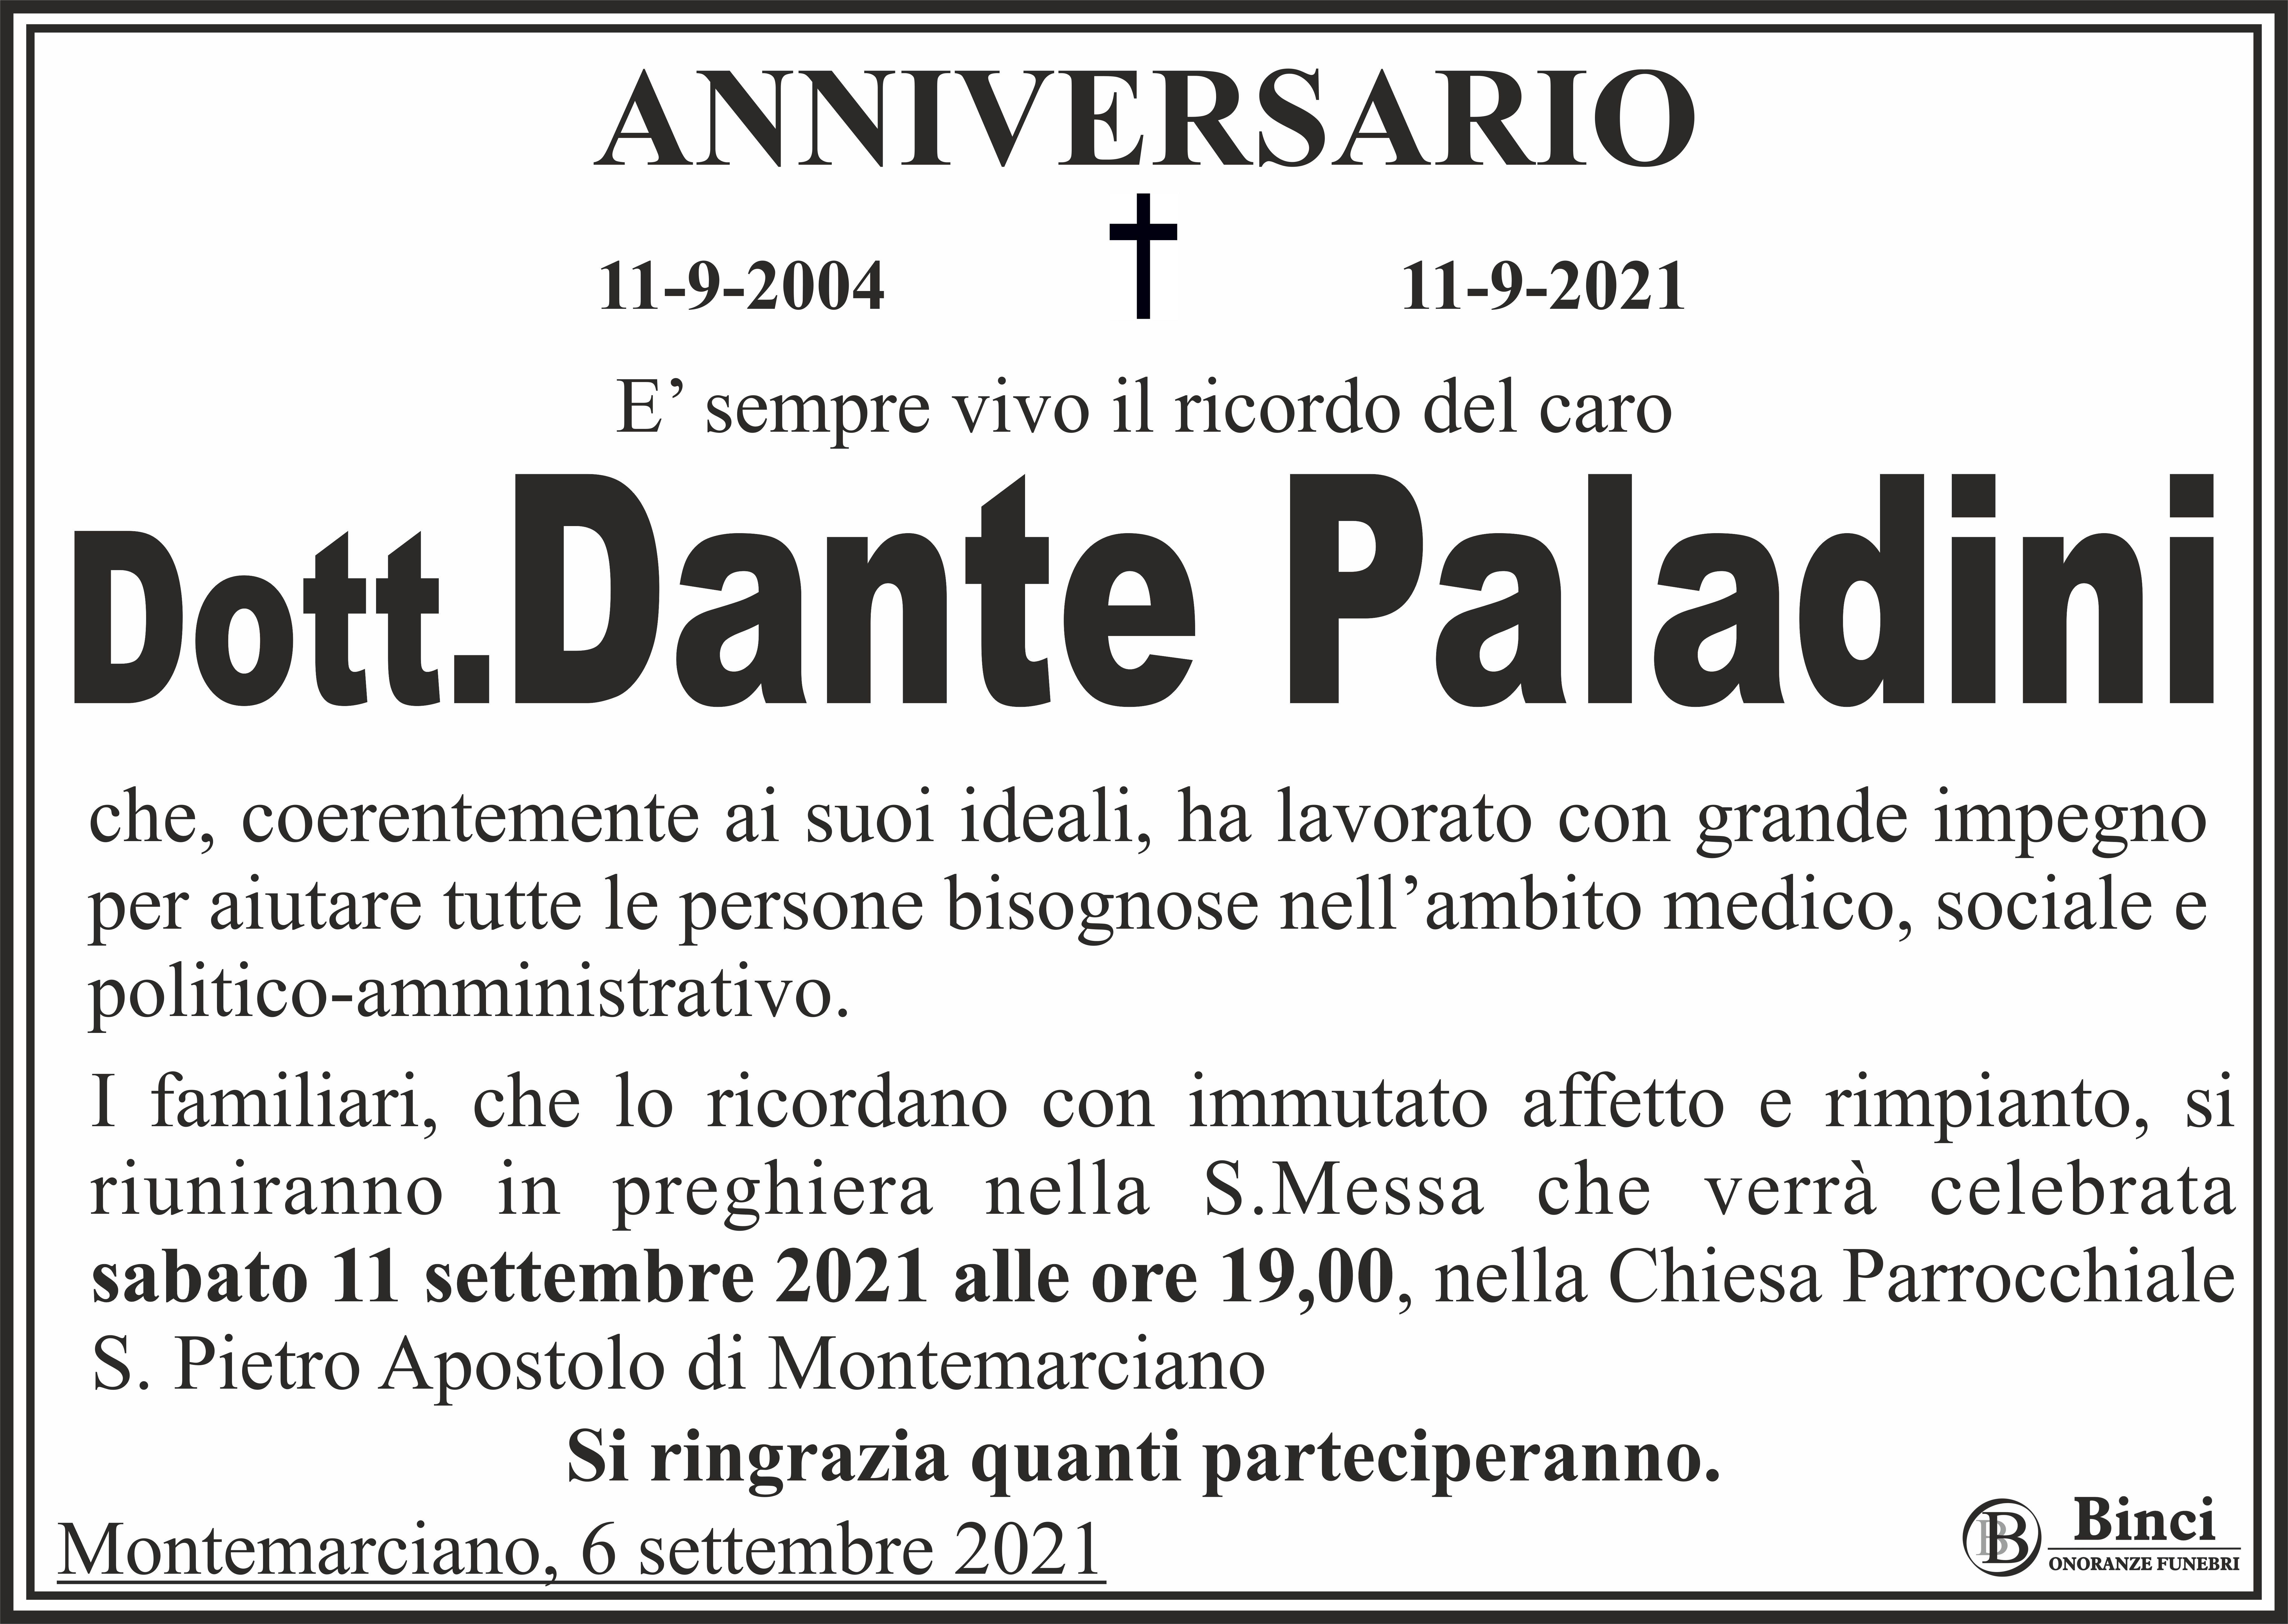 Dante Paladini